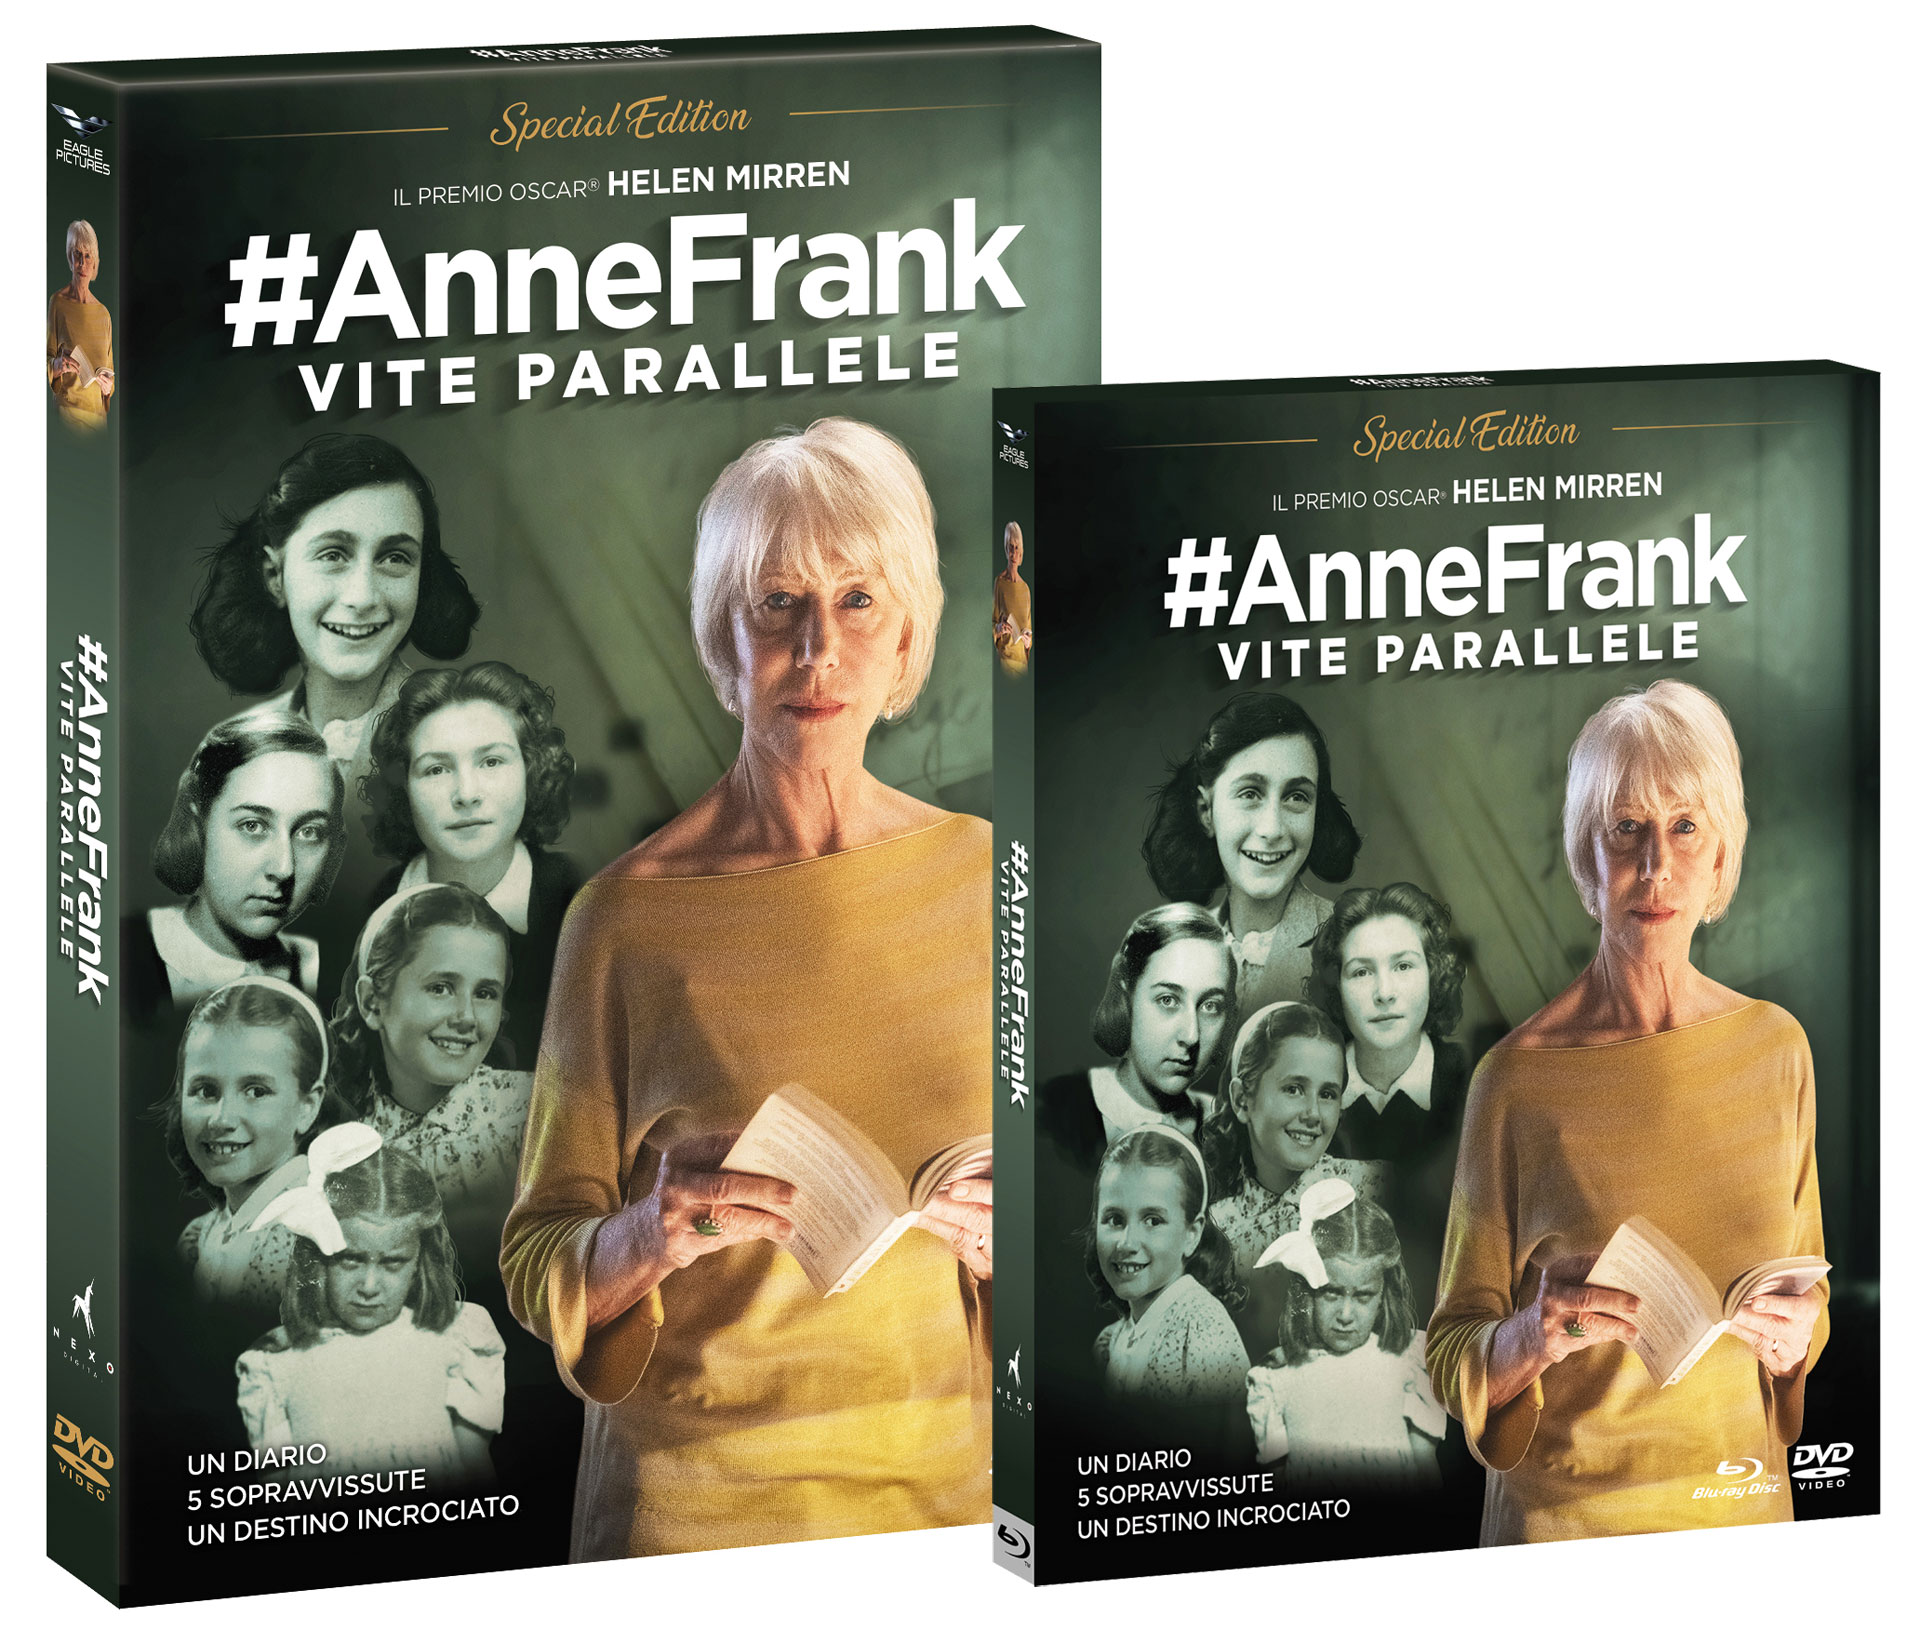 AnneFrank: Vite parallele